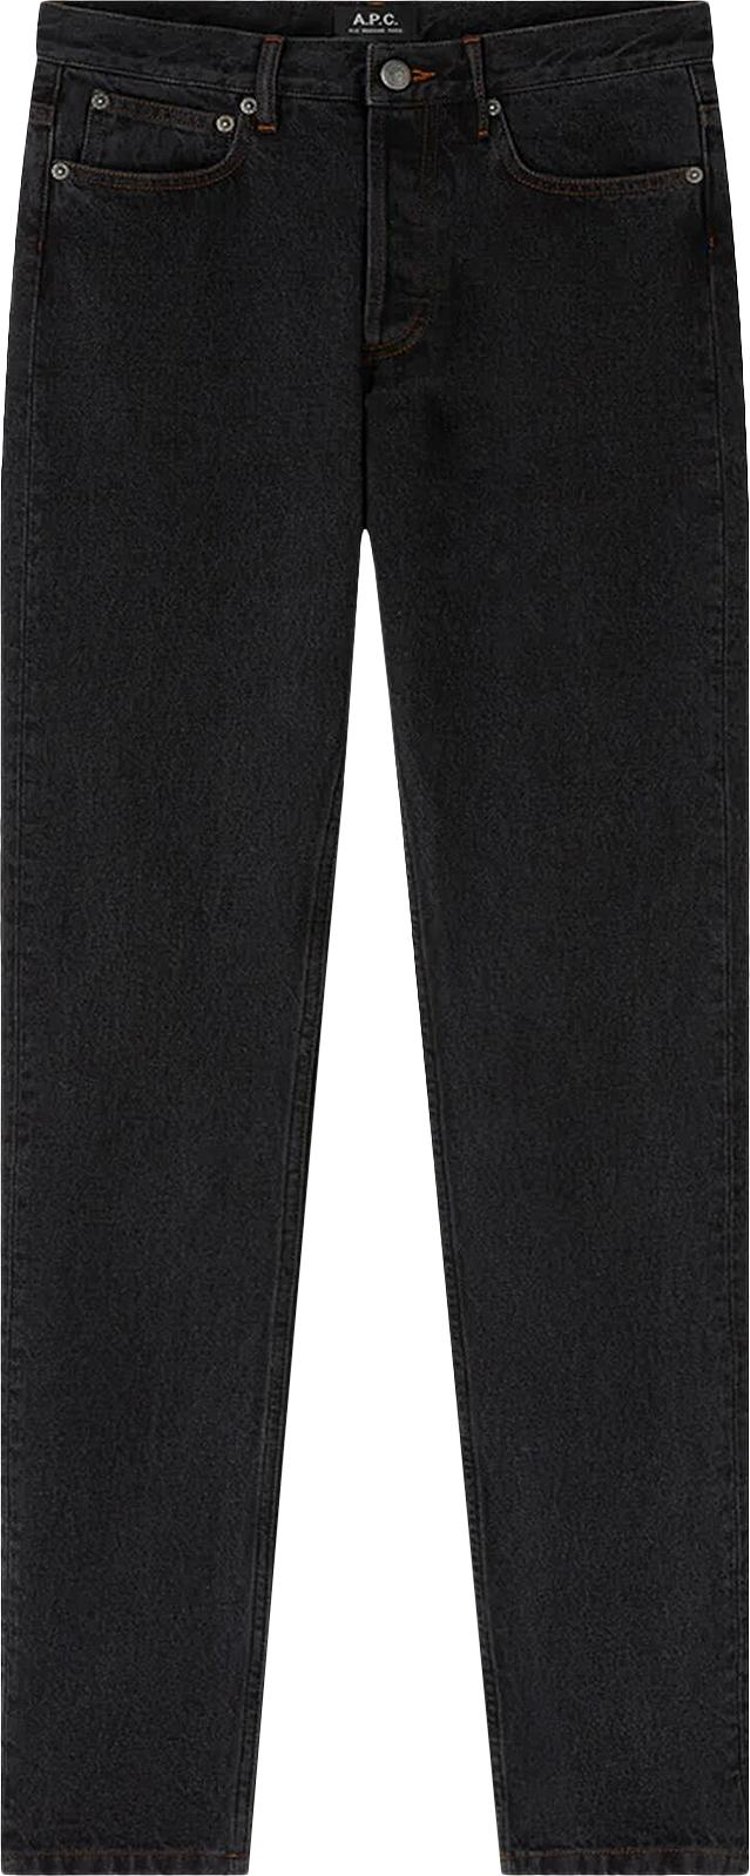 A.P.C. Petit New Standard Slim Fit Jeans 'Washed Black'